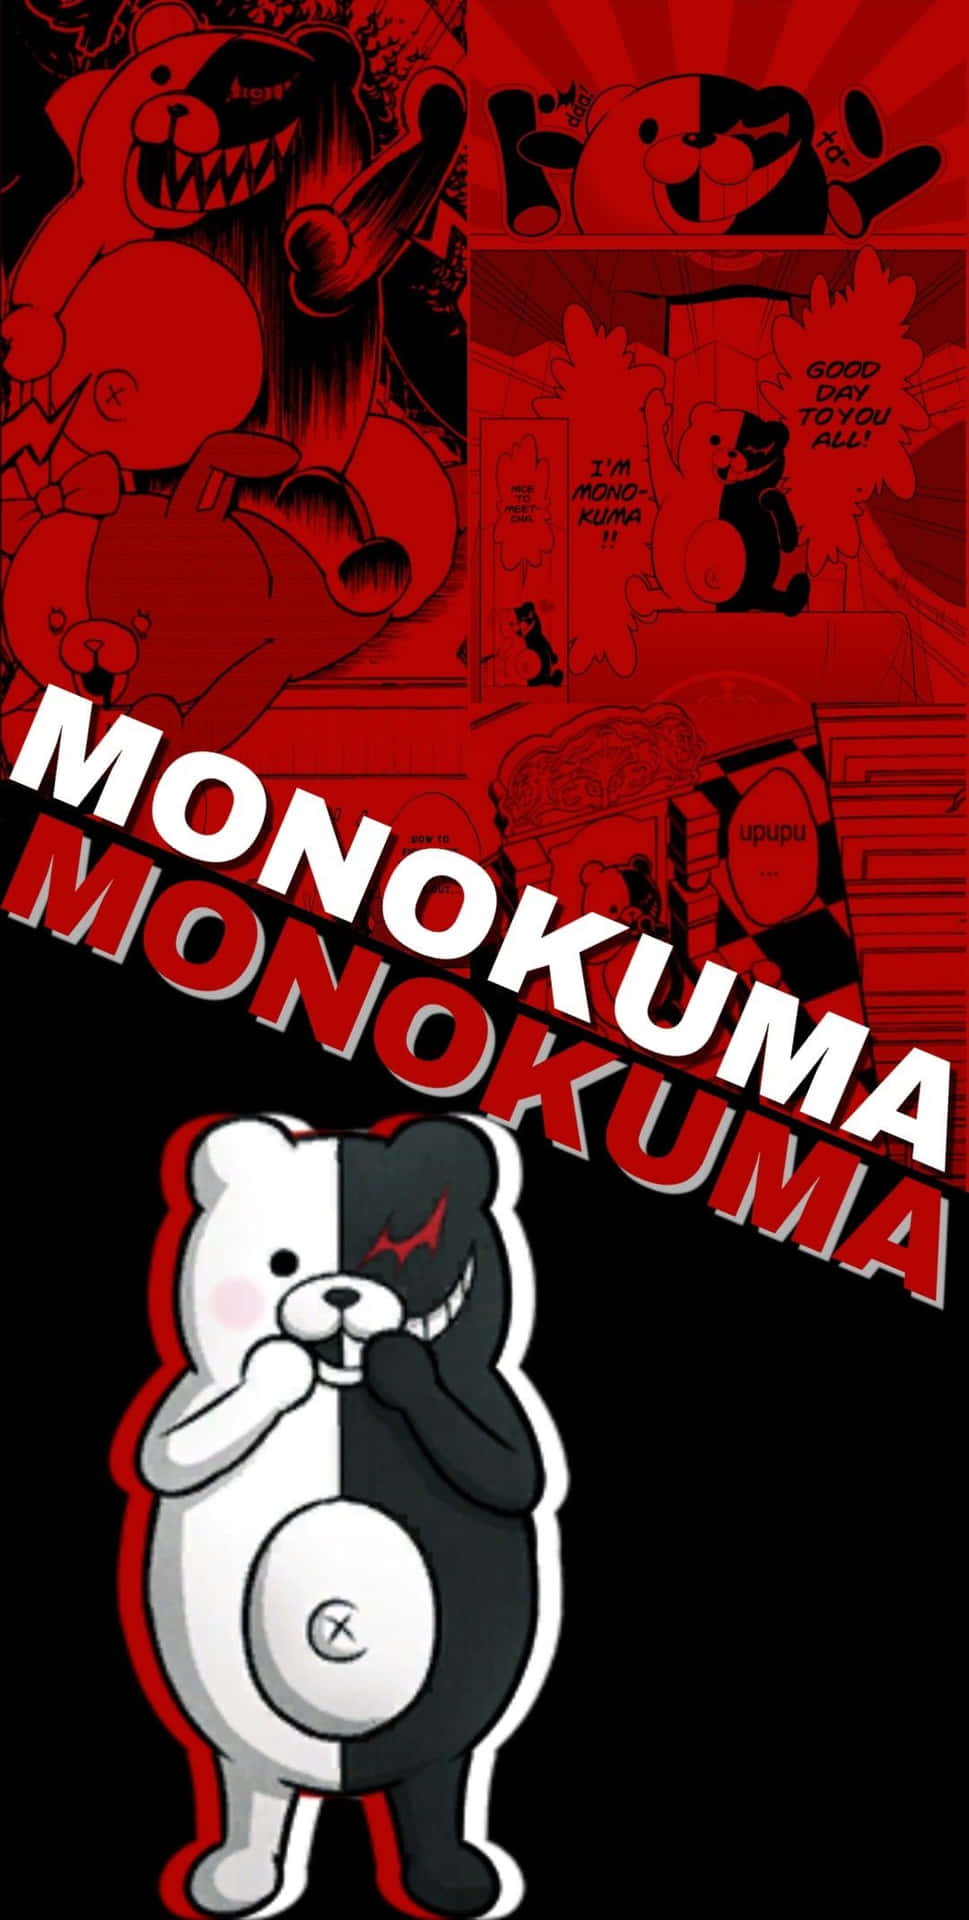 Monokuma 1080 X 2141 Wallpaper